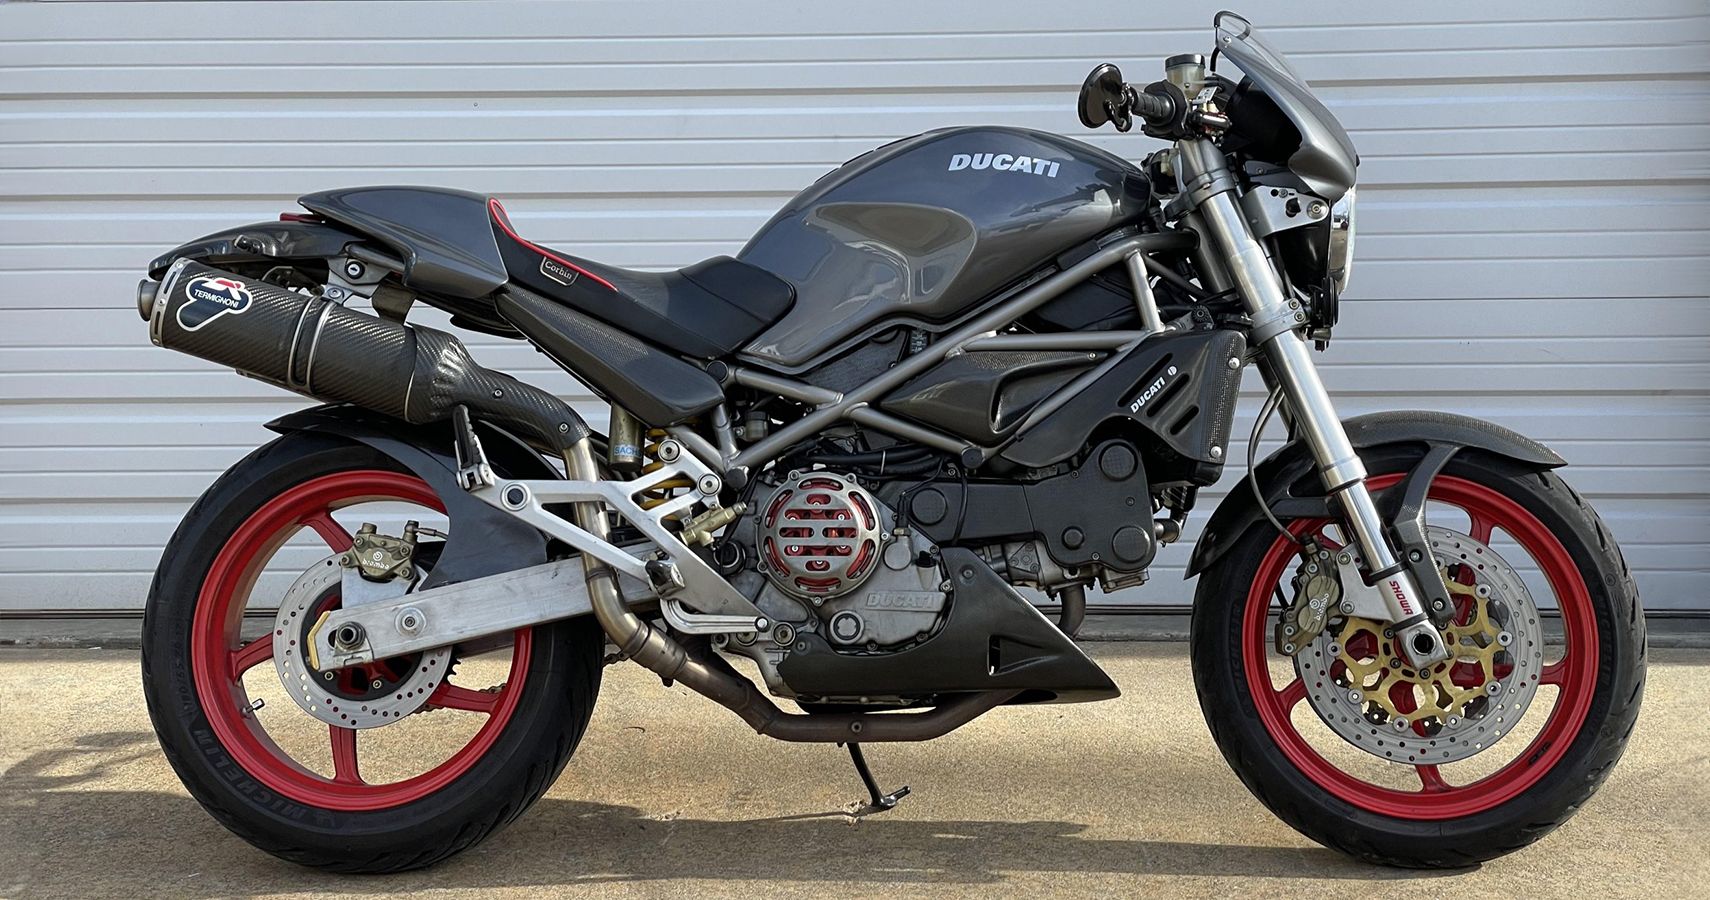 Quick carbon fiber restoration on a Ducati M900 that had a lot of